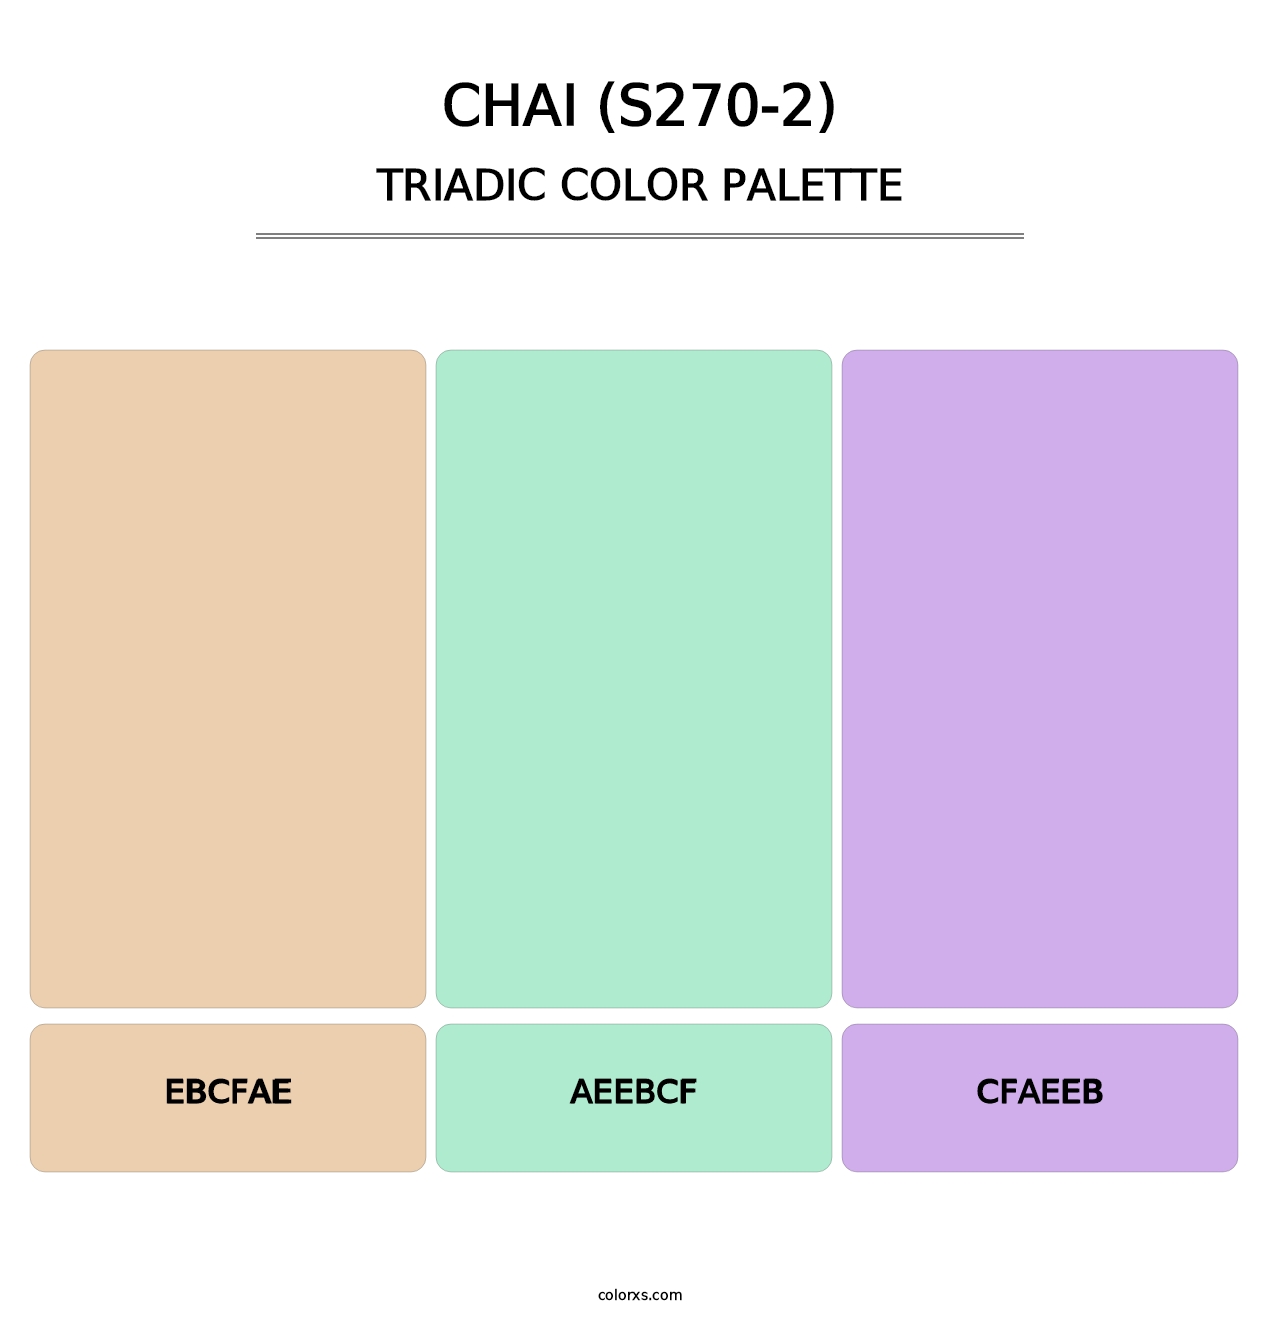 Chai (S270-2) - Triadic Color Palette